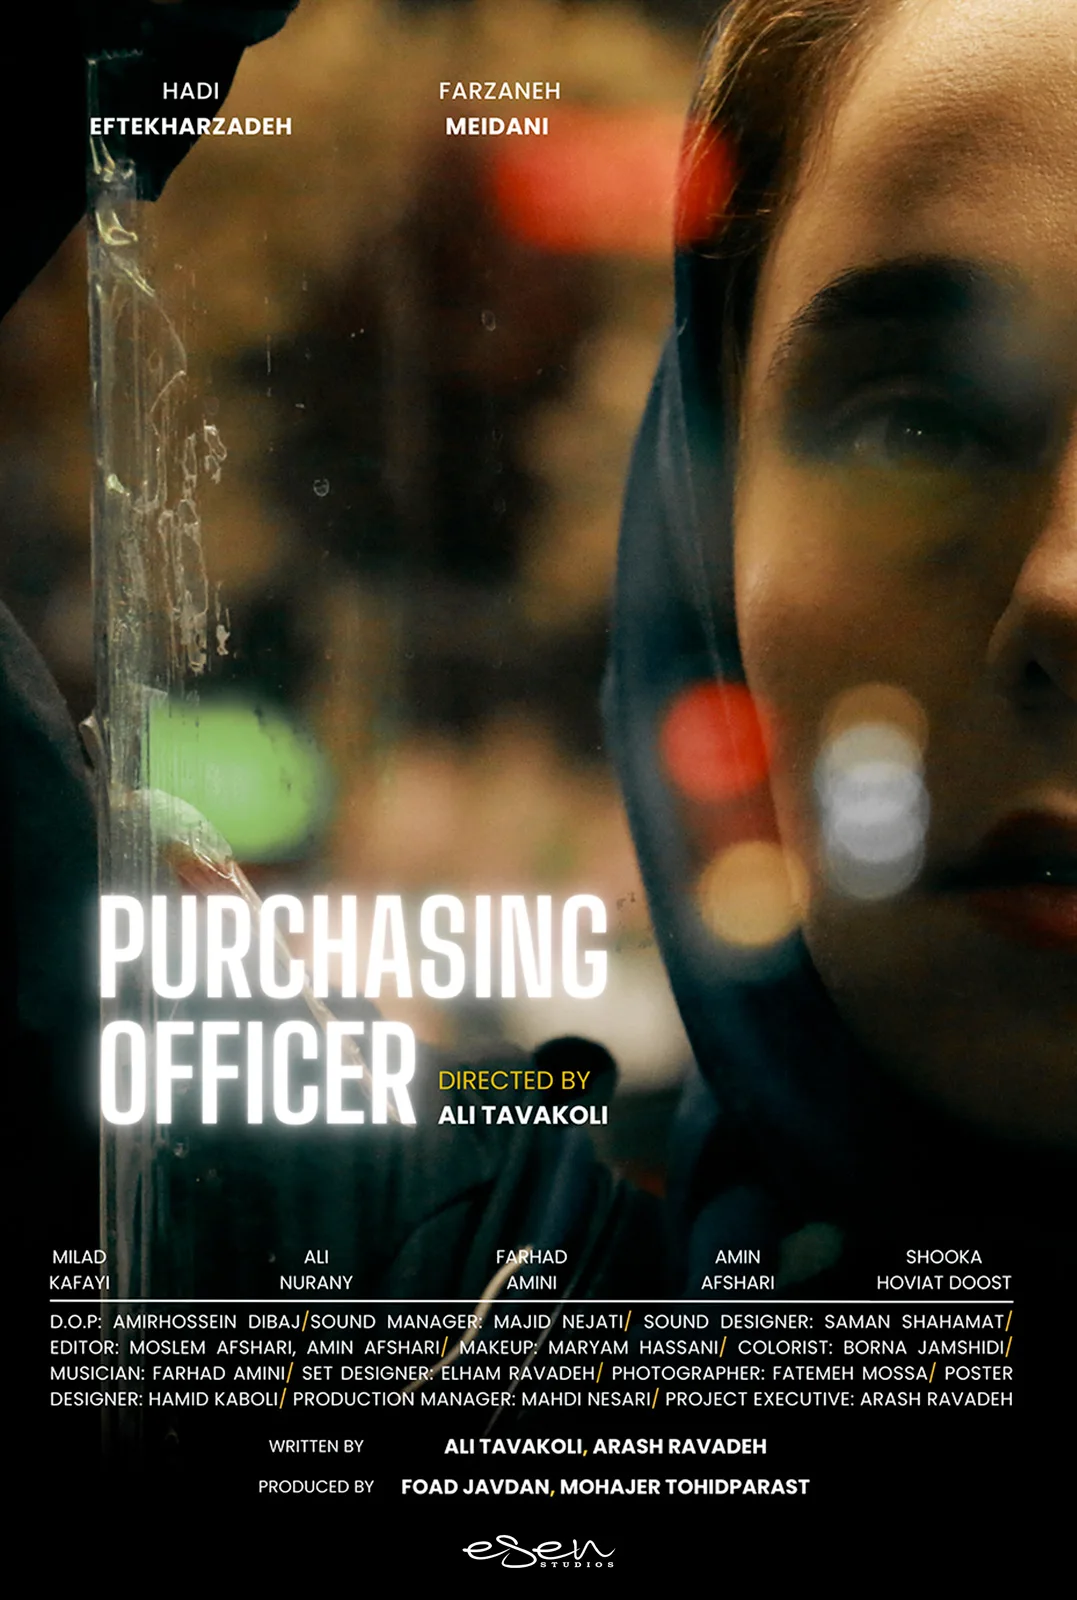 Poster of the iranian short film "Purchasing officer" by Ali Tavakoli